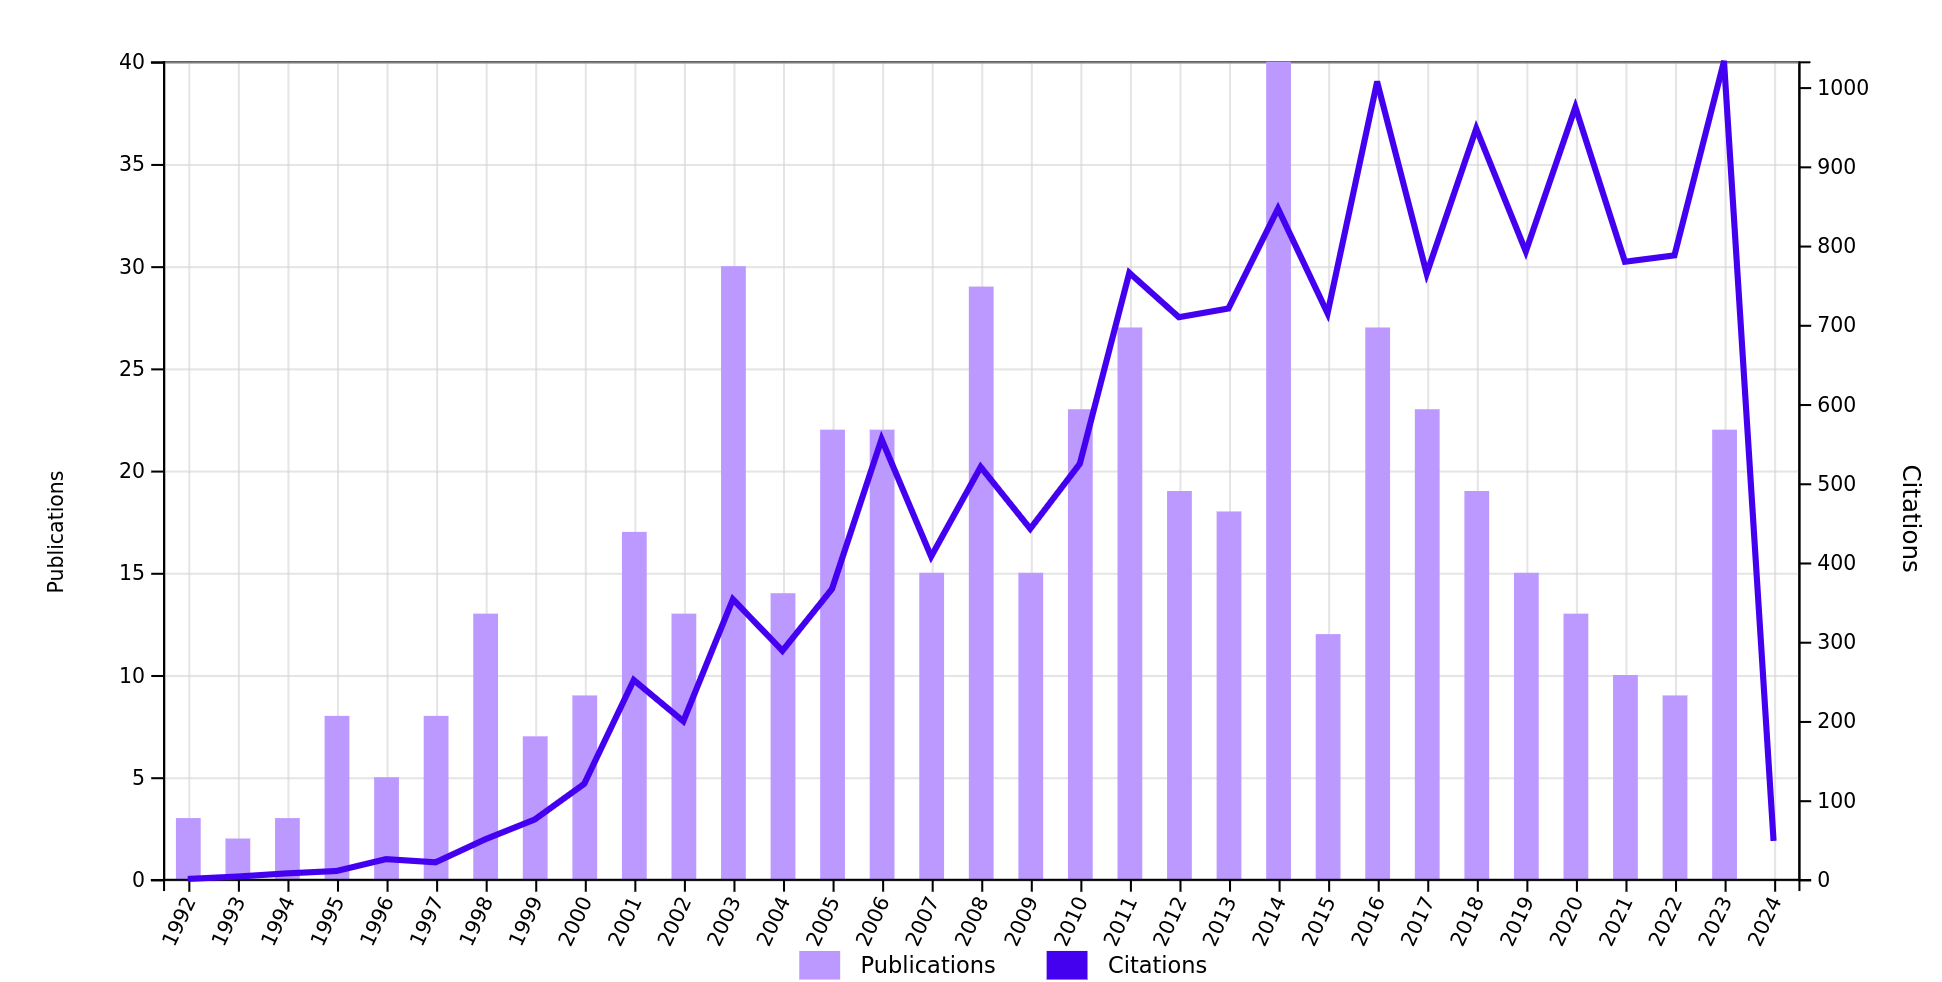 Publications and citations per year